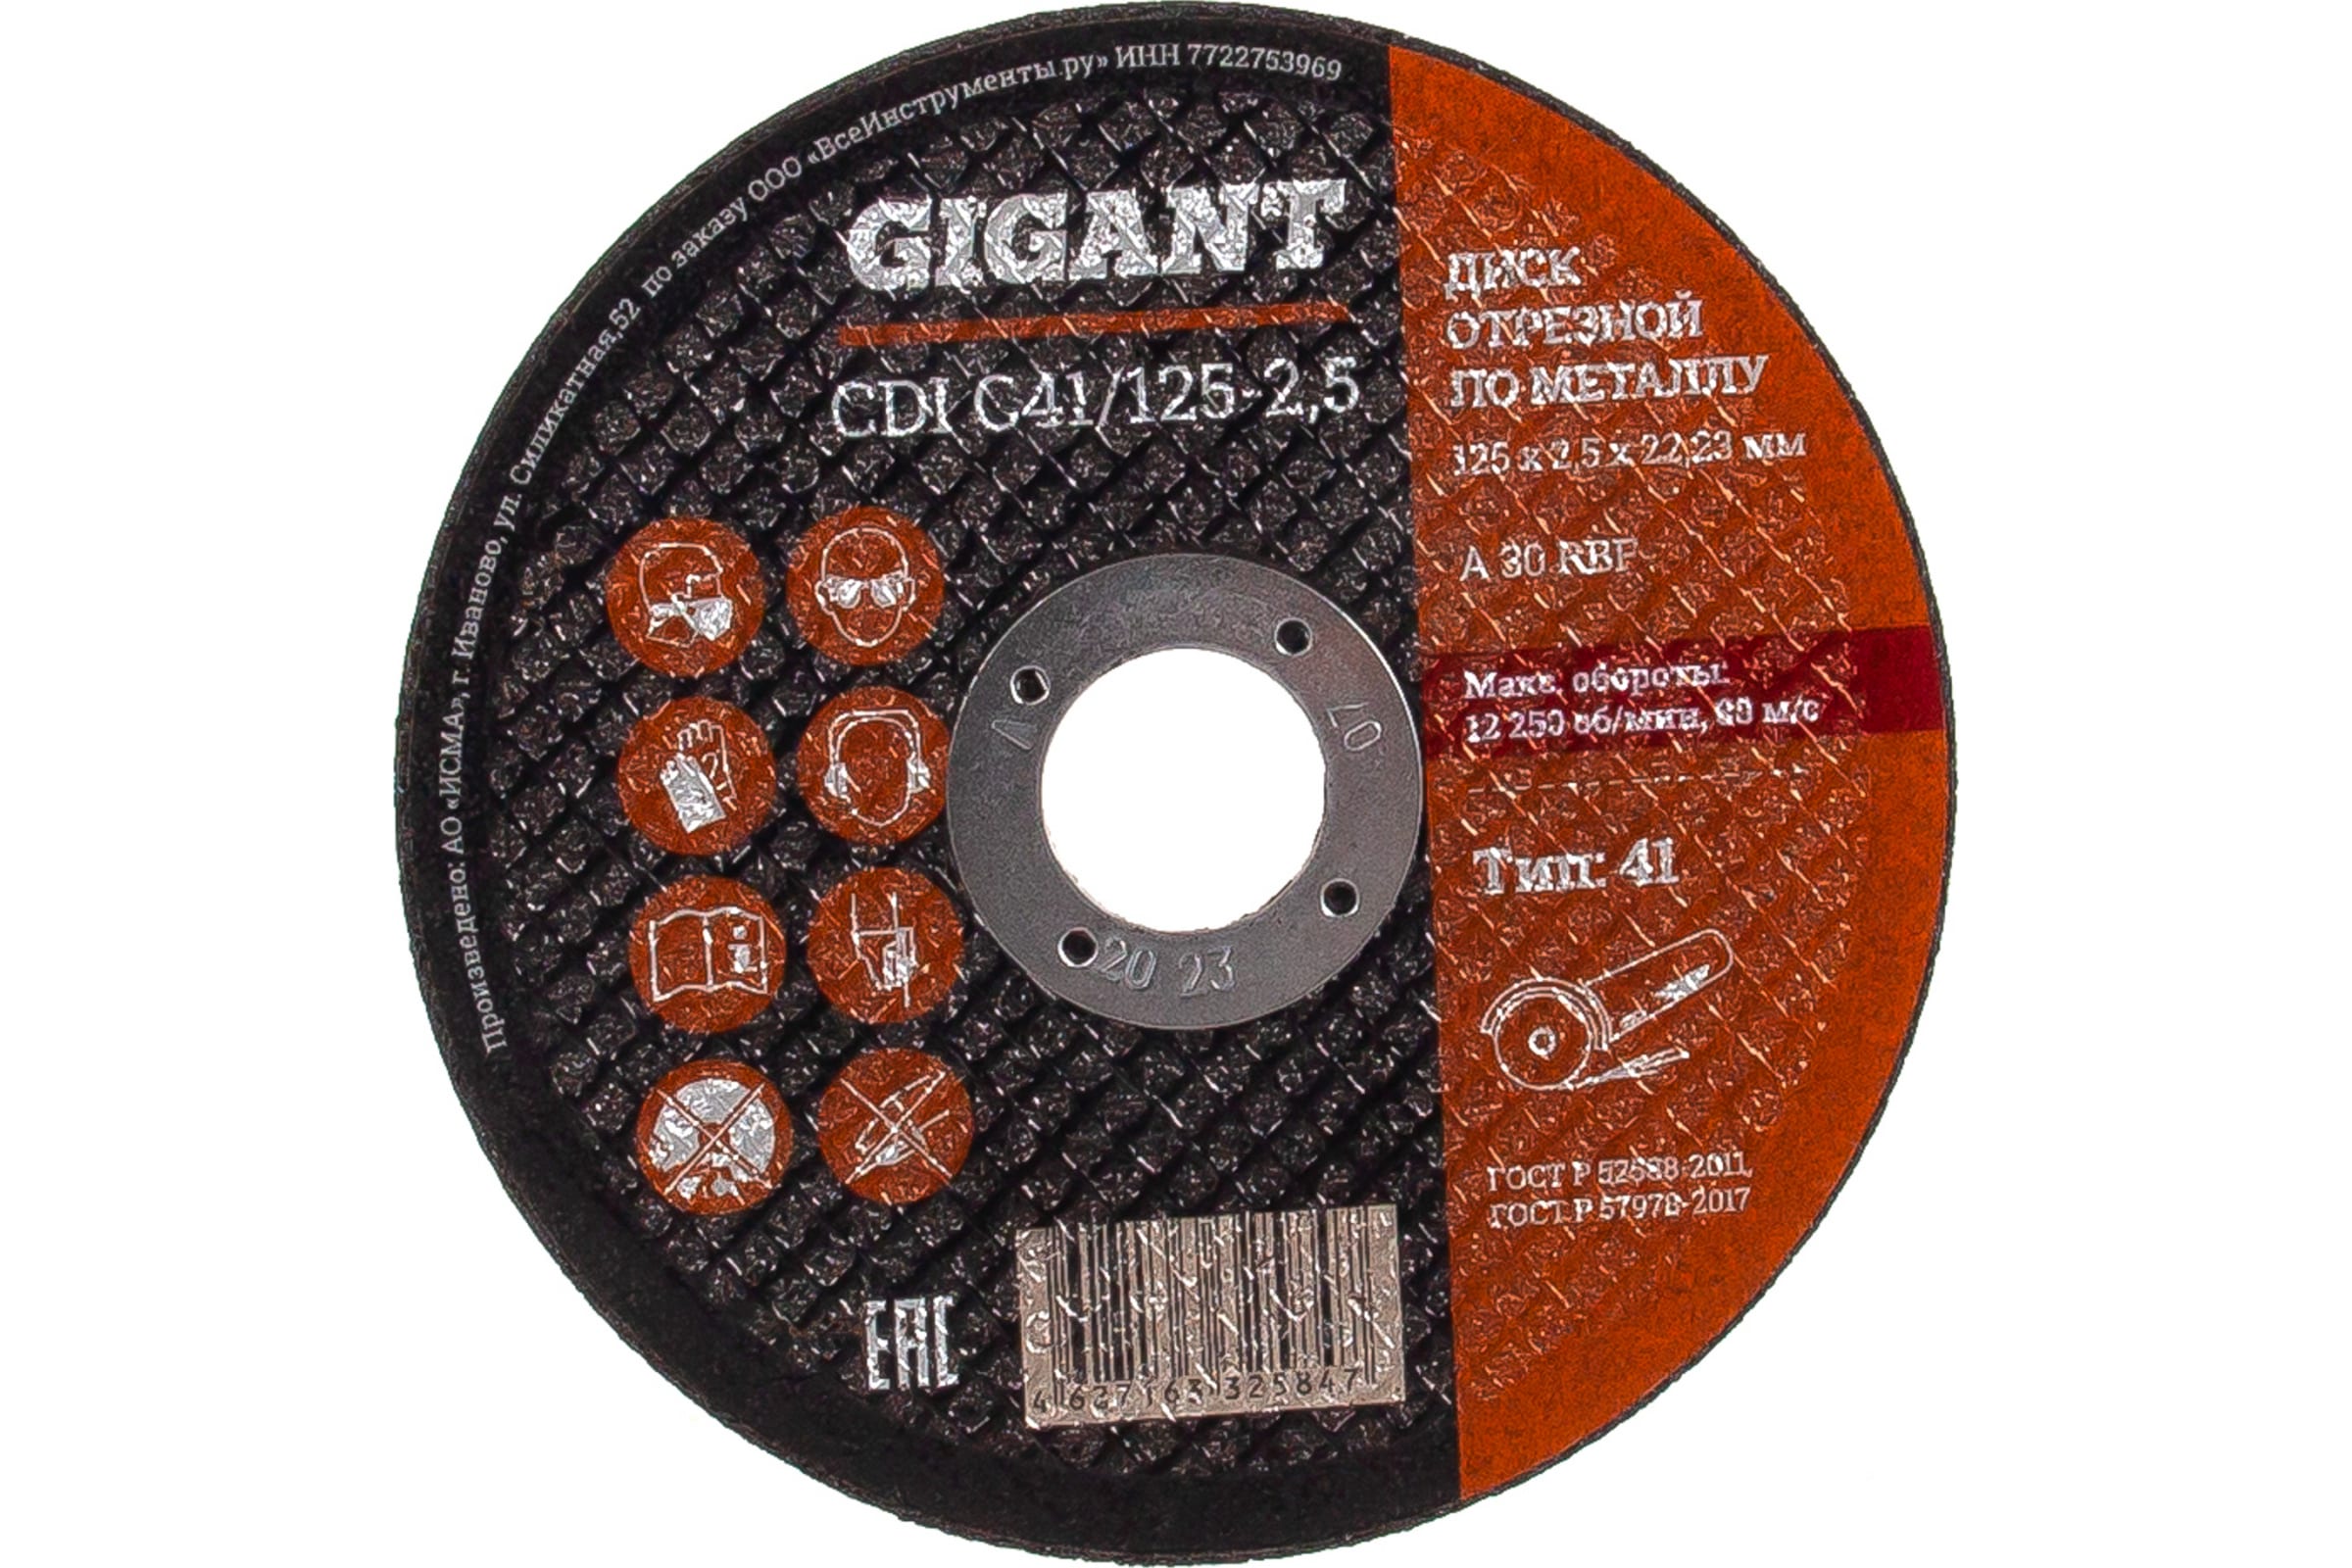 фото Gigant диск отрезной по металлу 125x2,5x22 мм cdi c41/125-2,5